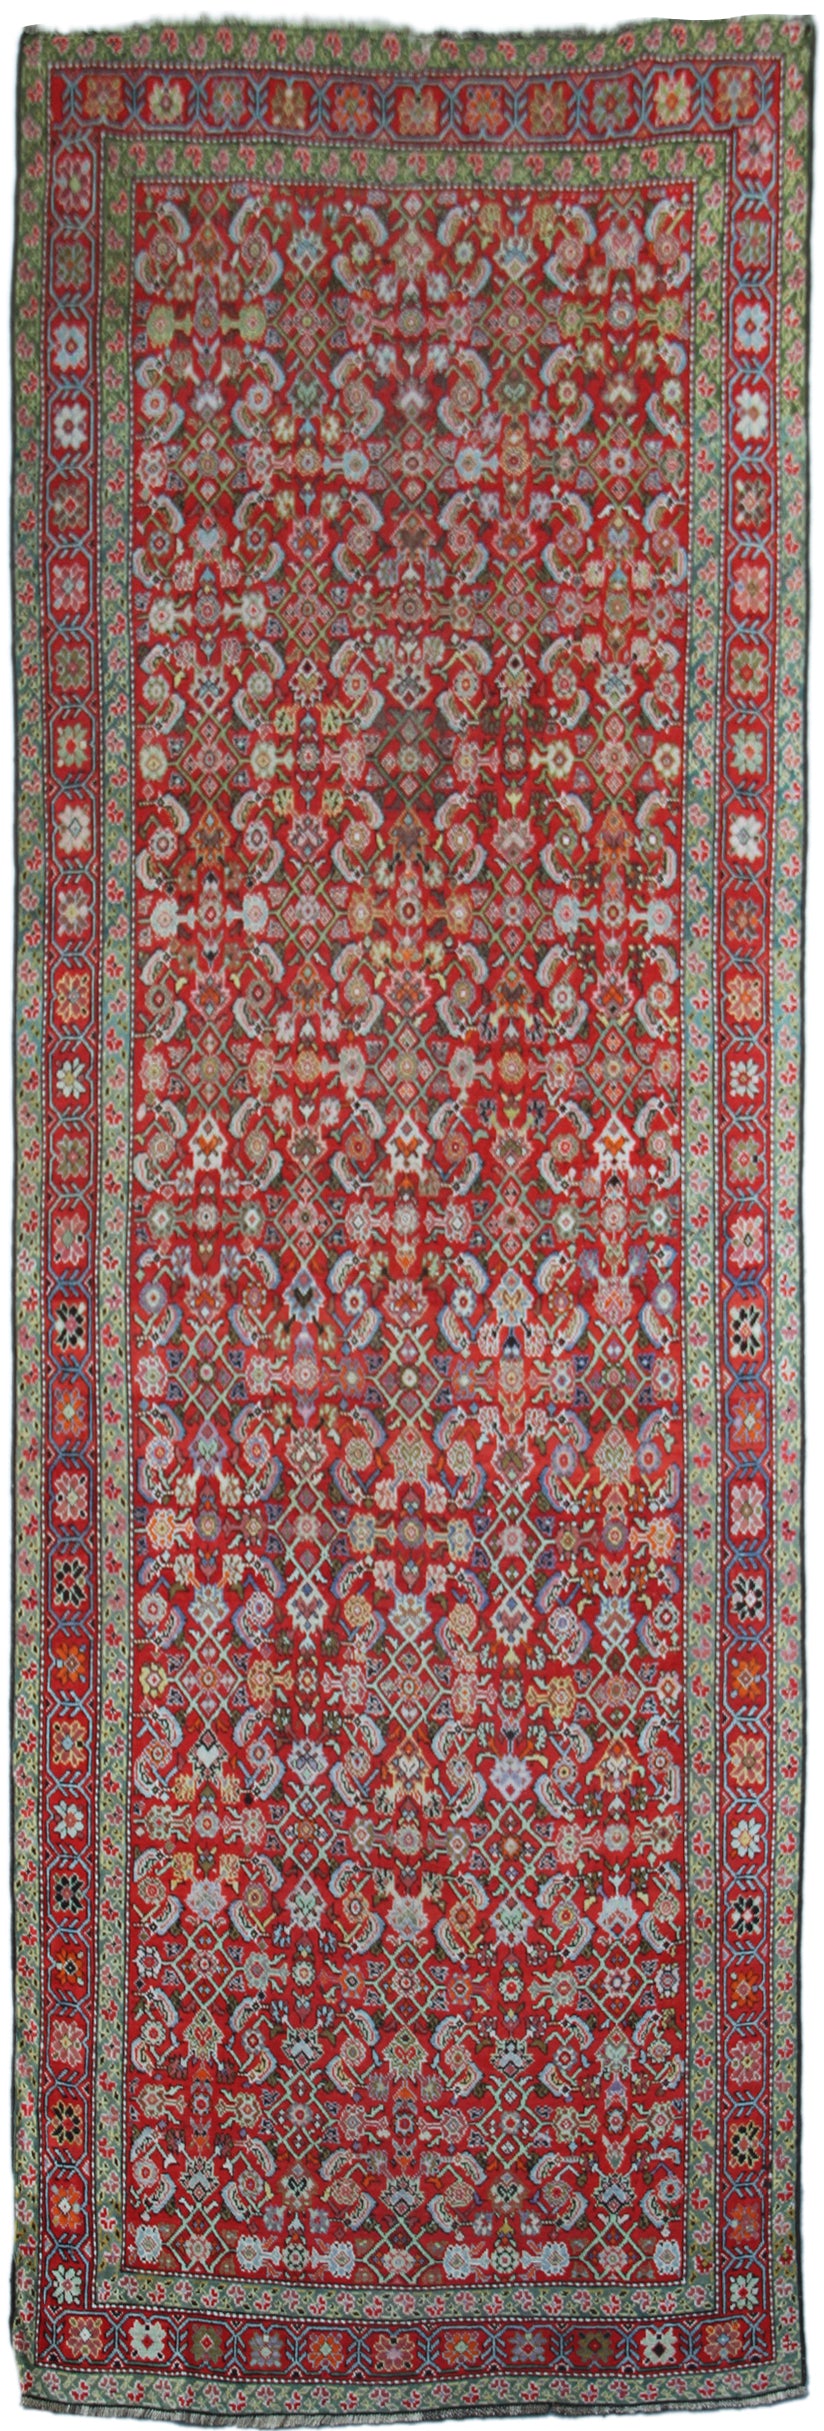 5'x13' Red Vintage Herati Design Persian Gallery Runner Rug